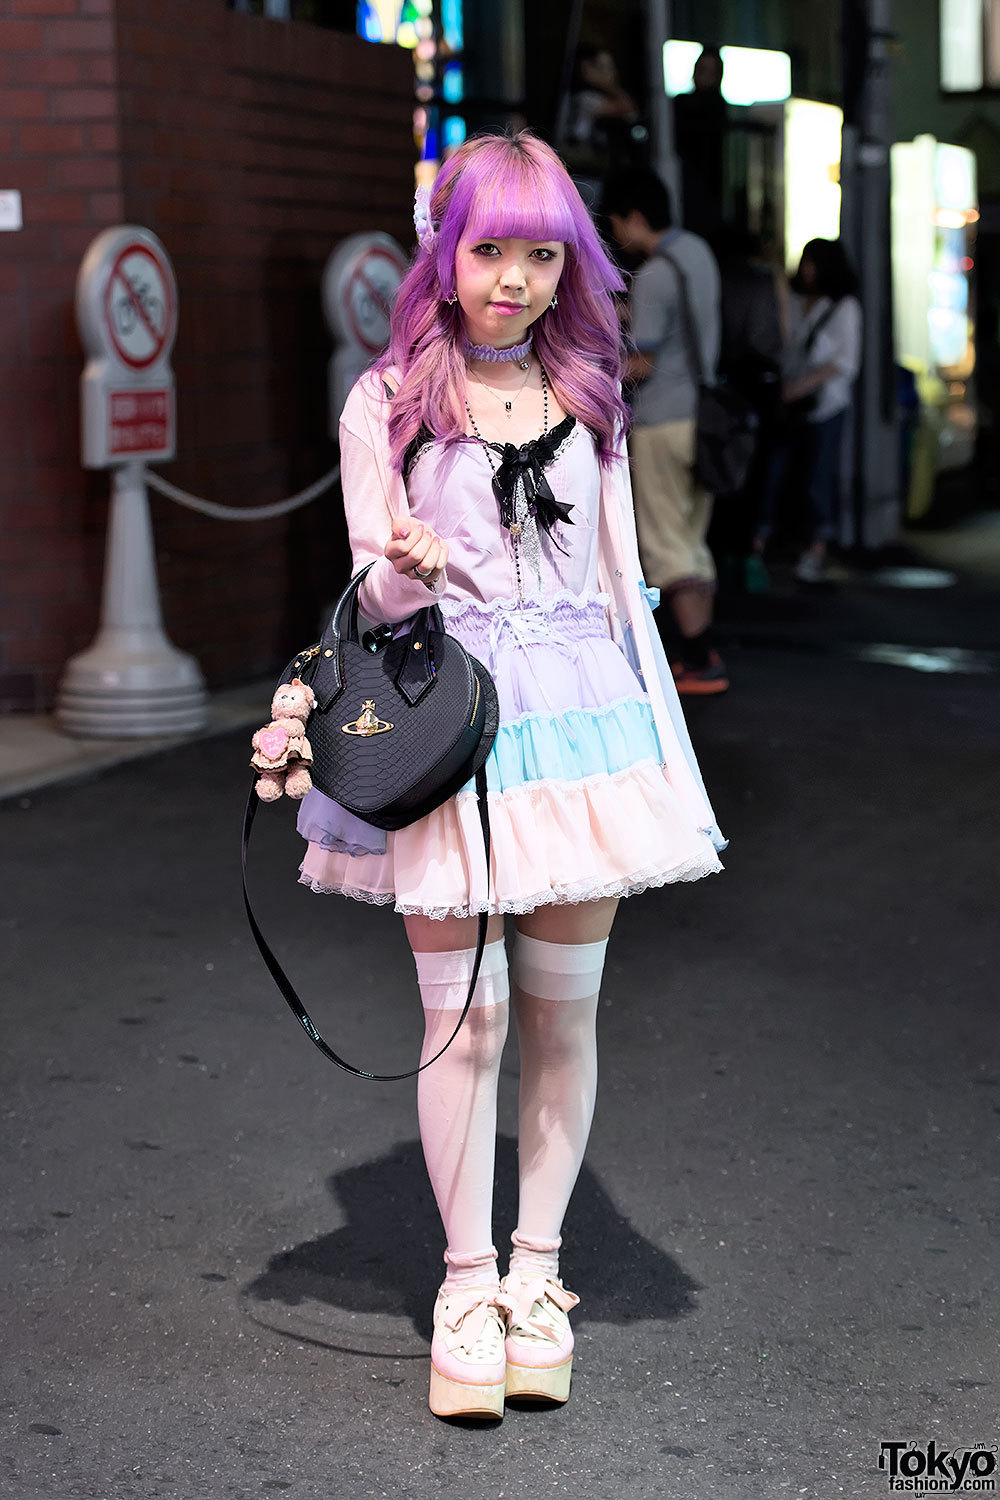 tokyo-fashion:  Moko from Hong Kong on the street in Harajuku w/ pink hair, Lunatic